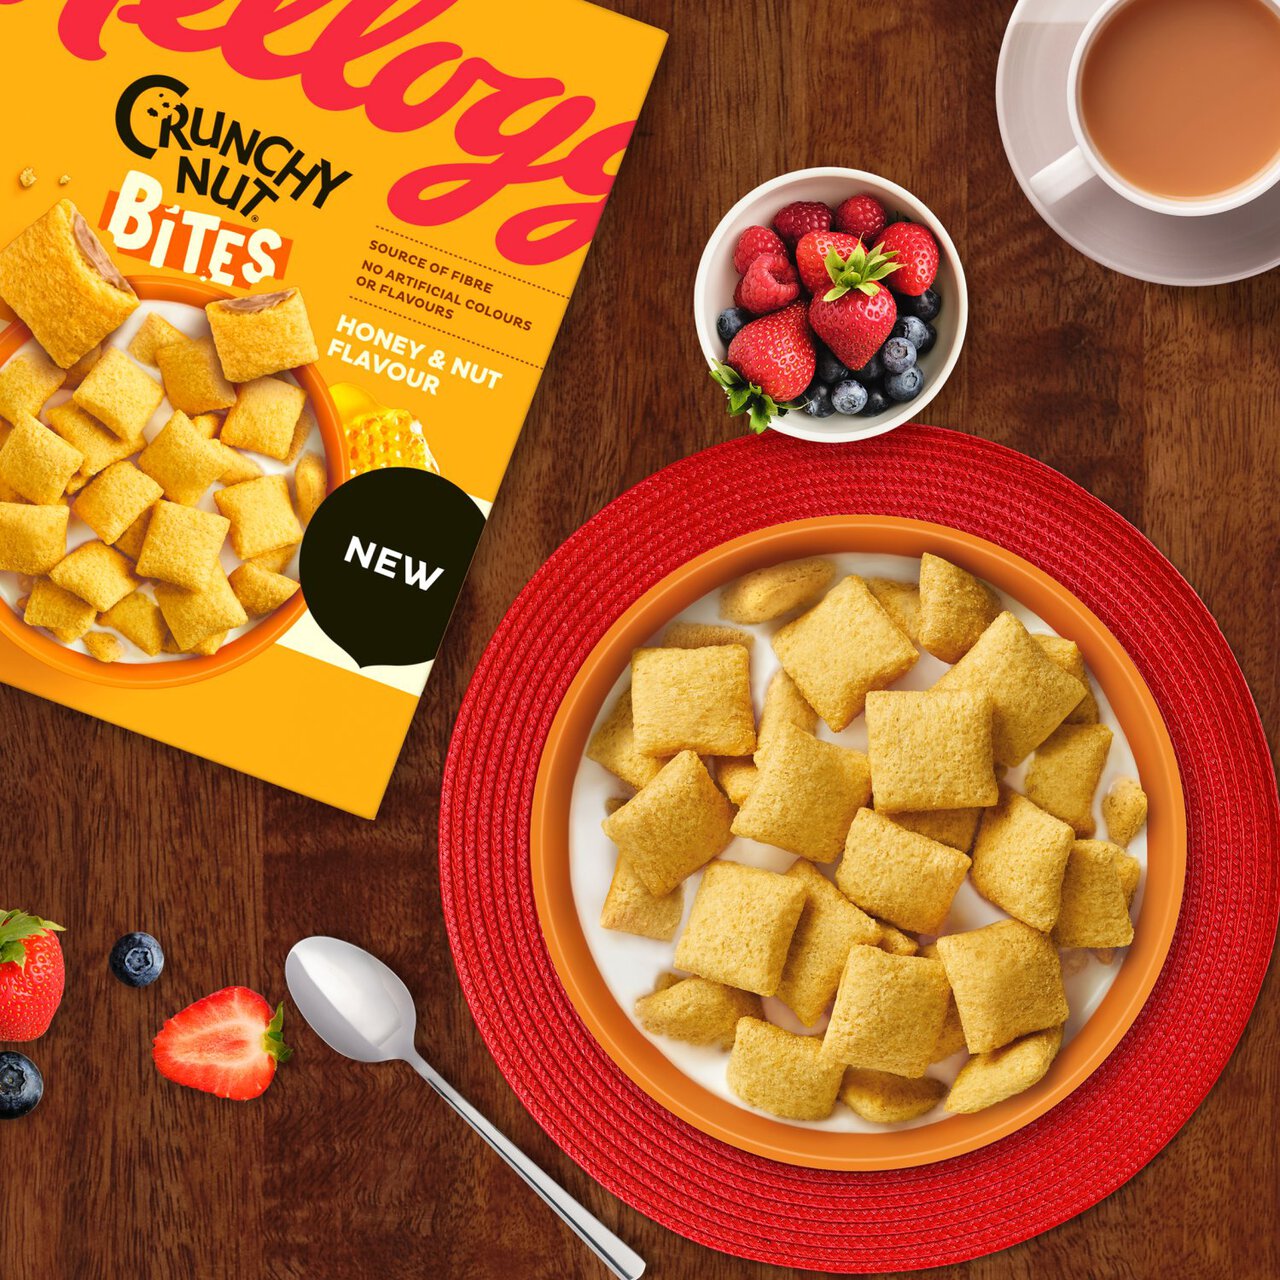 Kellogg's Crunchy Nut Bites Honey & Nut Flavour Breakfast Cereal 375g